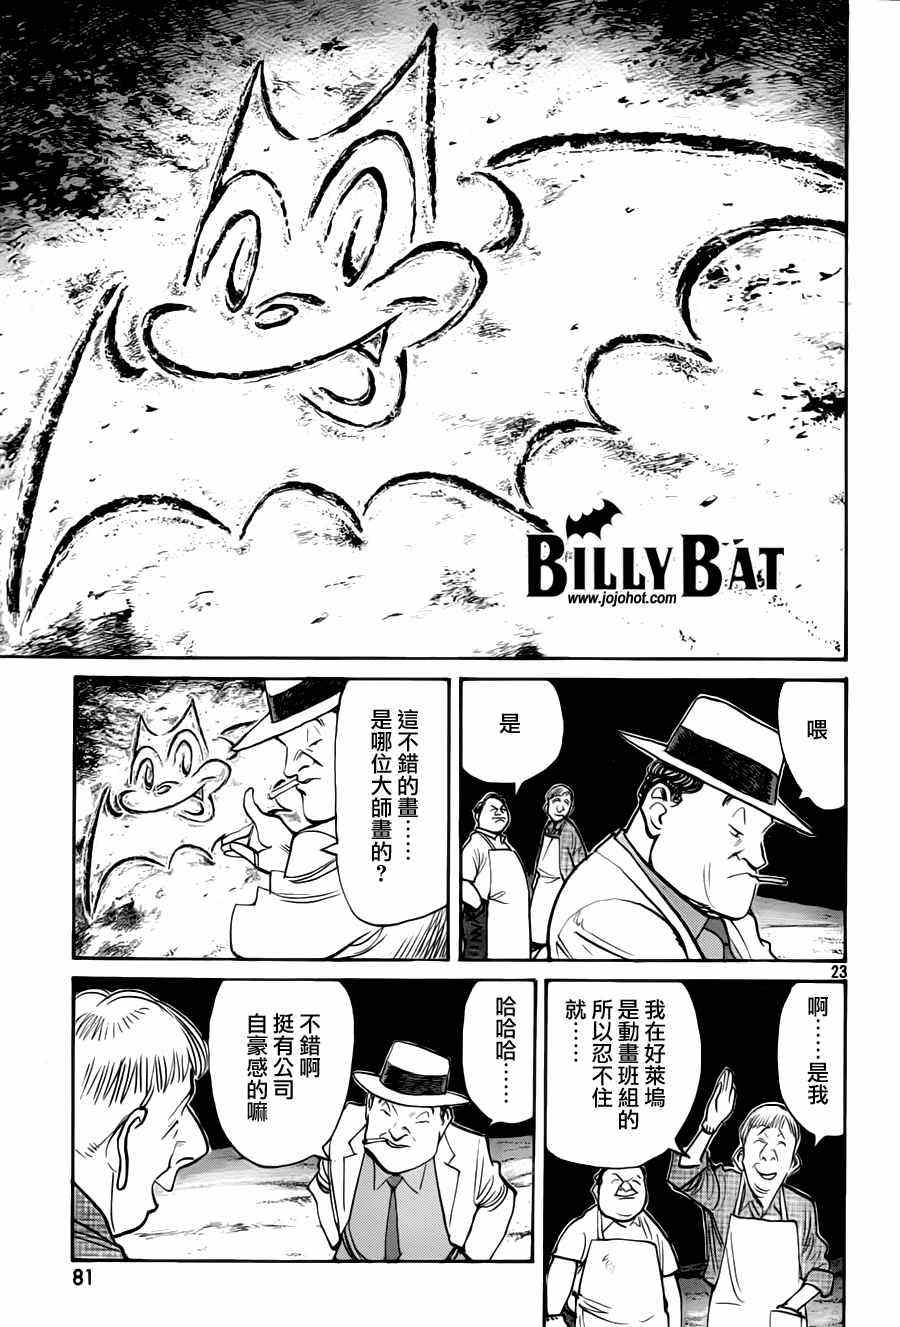 Billy_Bat - 第74话 - 3